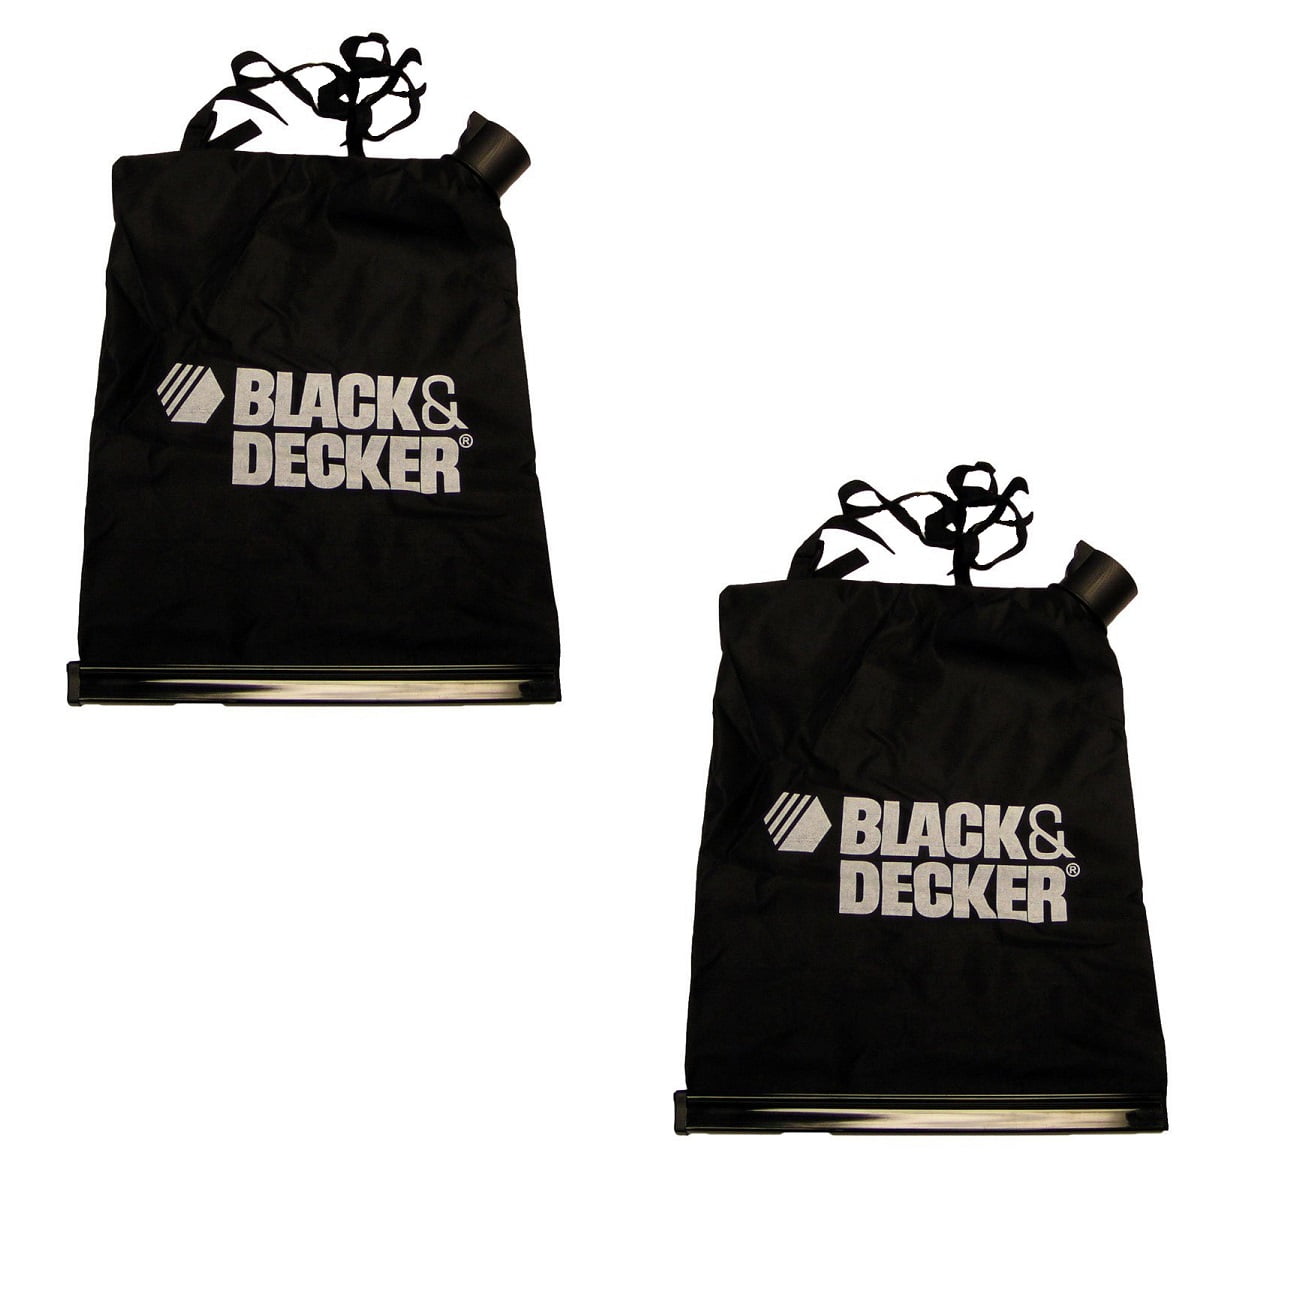 Black and Decker Blower/Vacuum Replacement 2 Pack Leaf Bag # 90560020-2PK